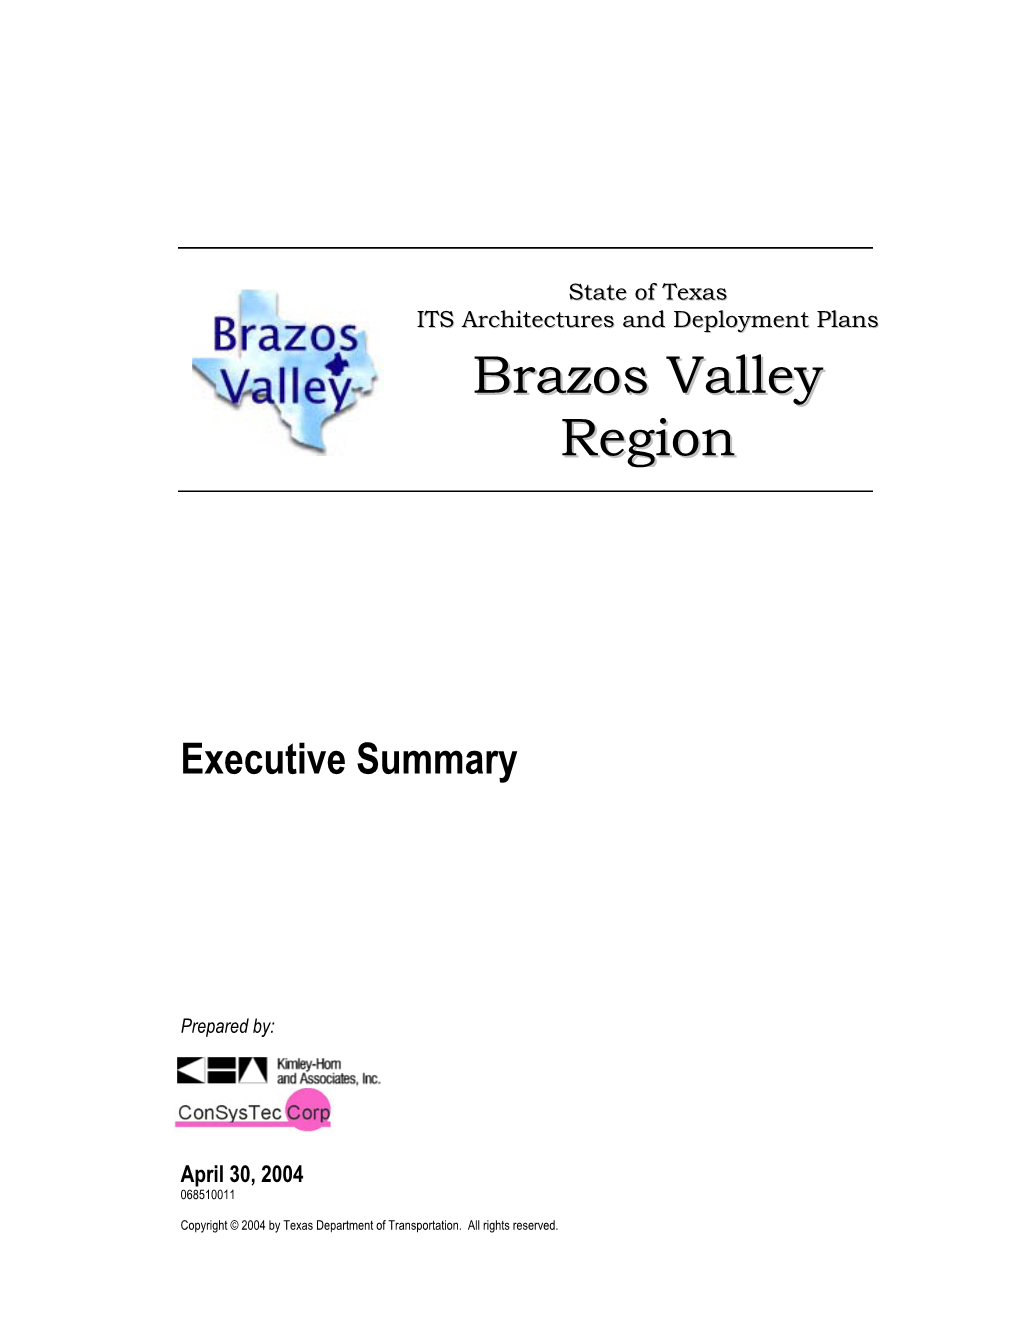 Brazos Valley Region